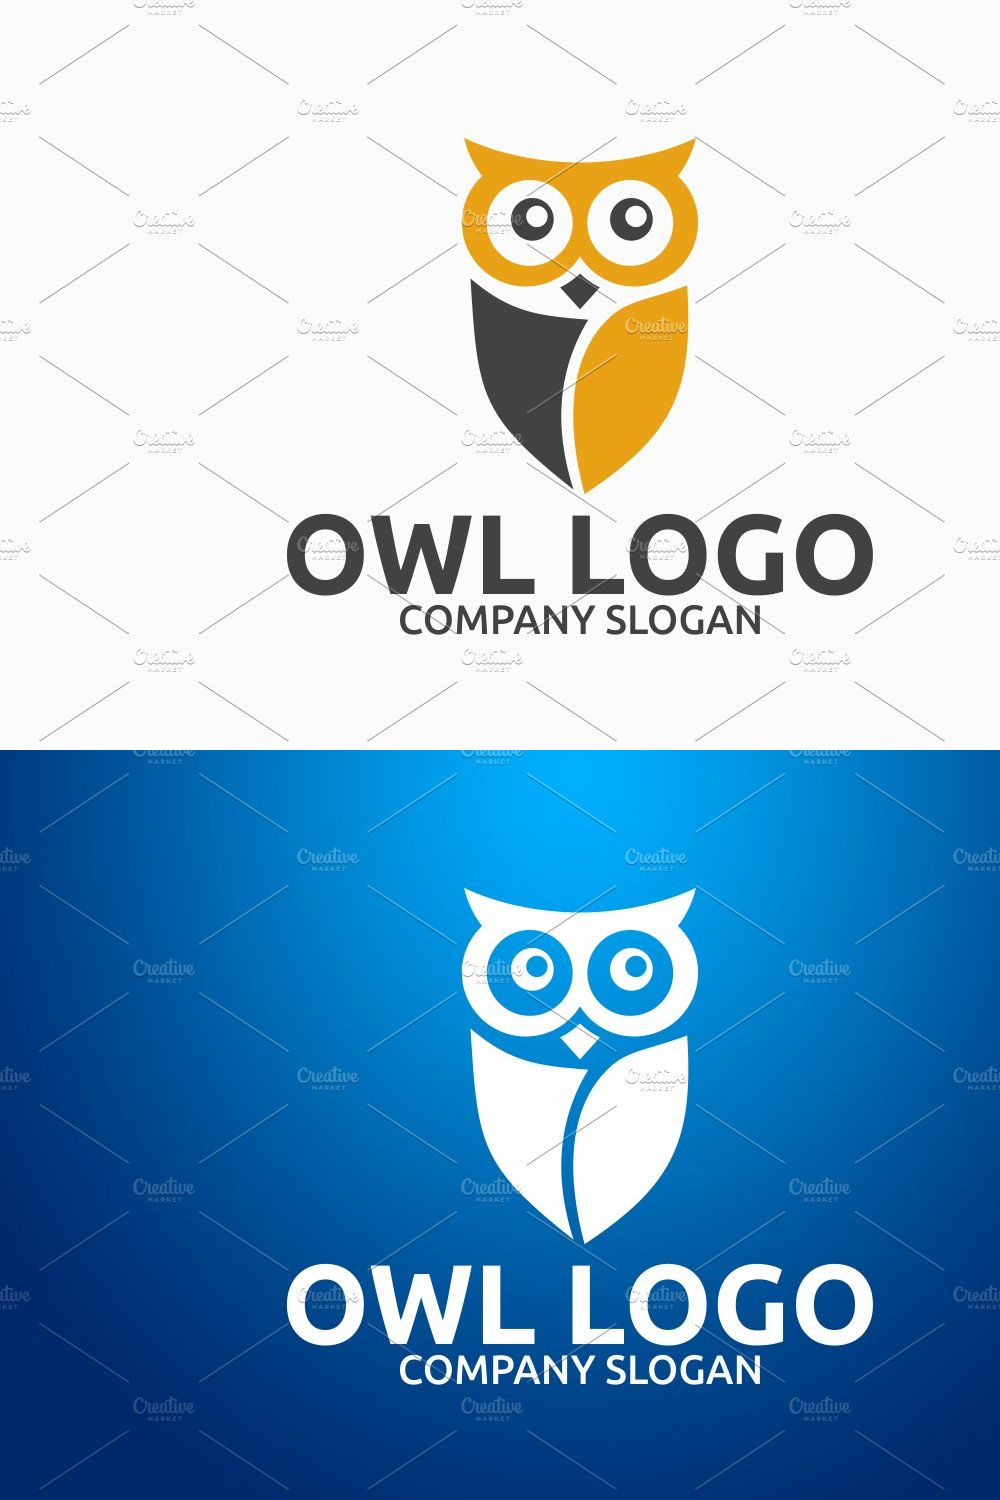 Owl Logo pinterest preview image.